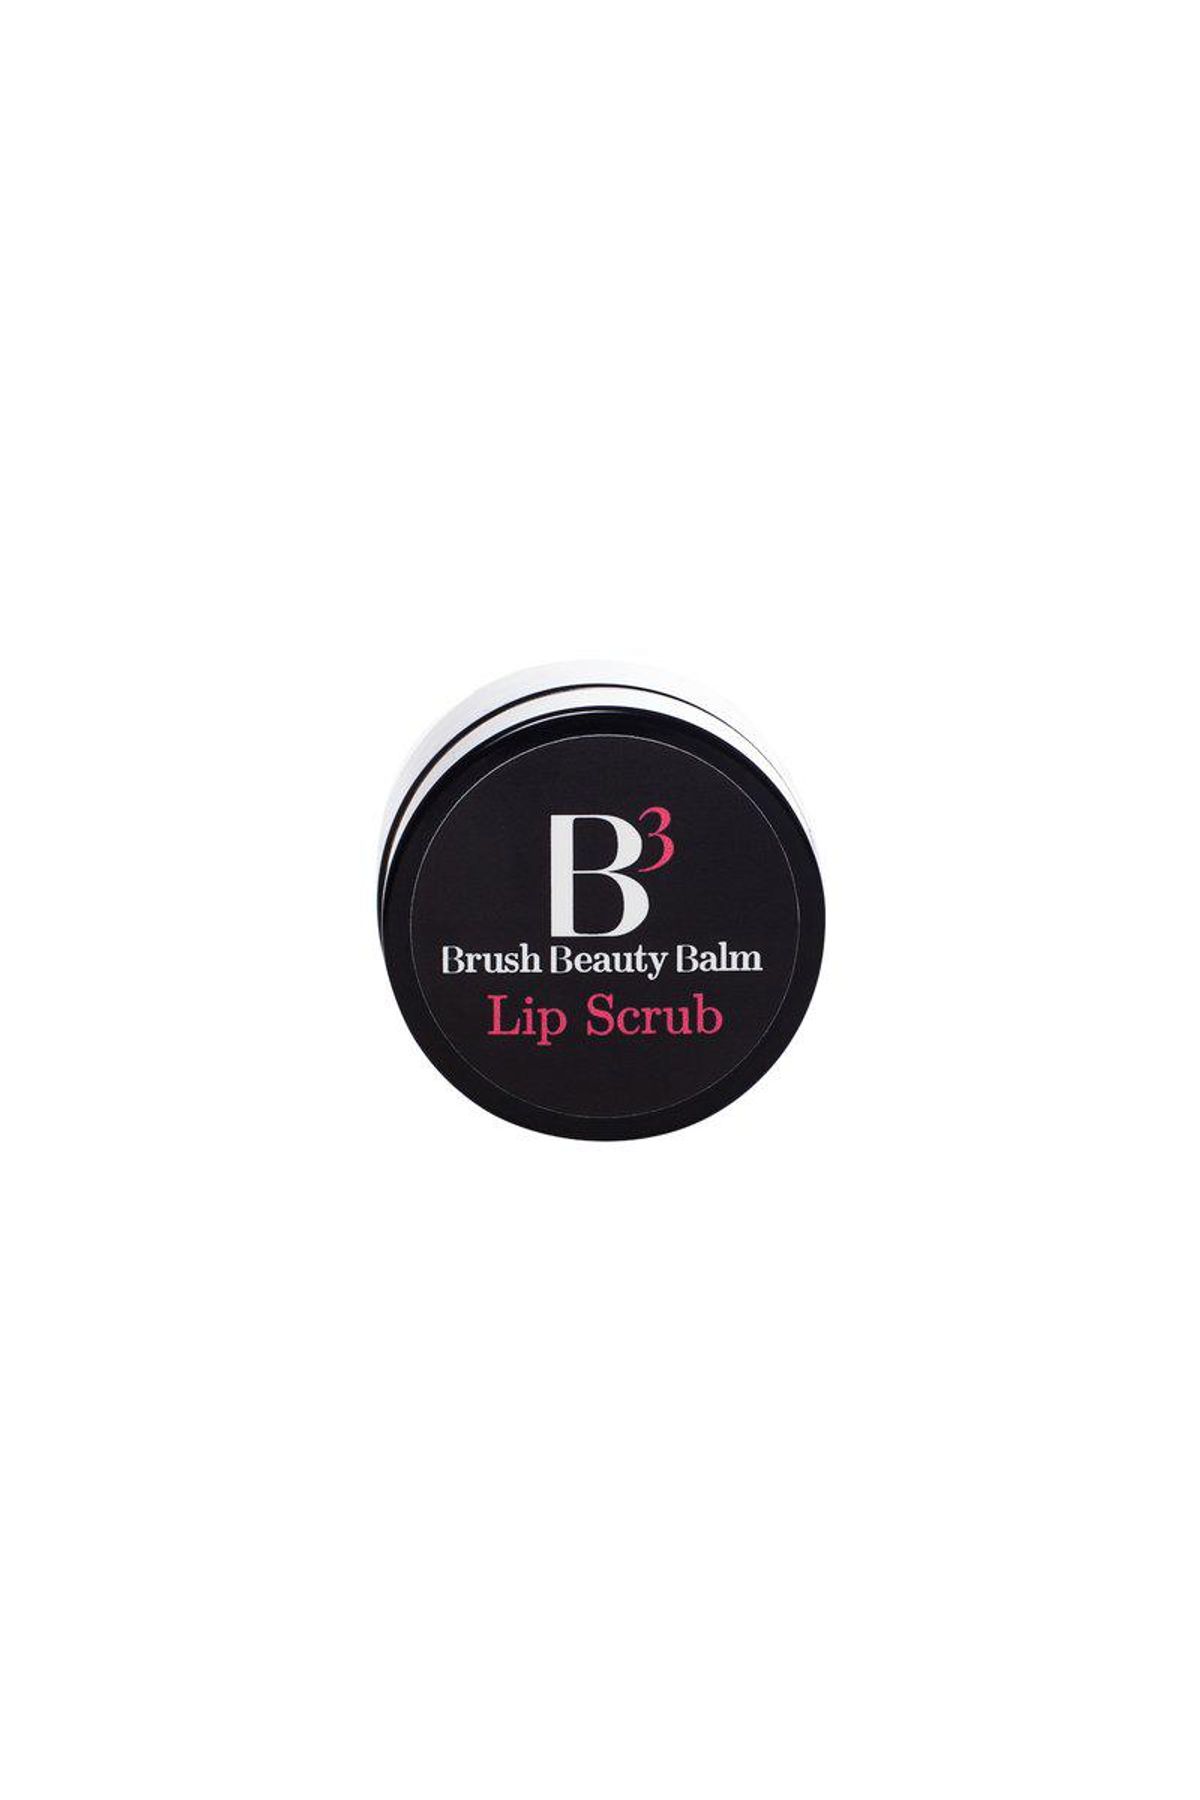 b3 brush beauty balm lip scrub